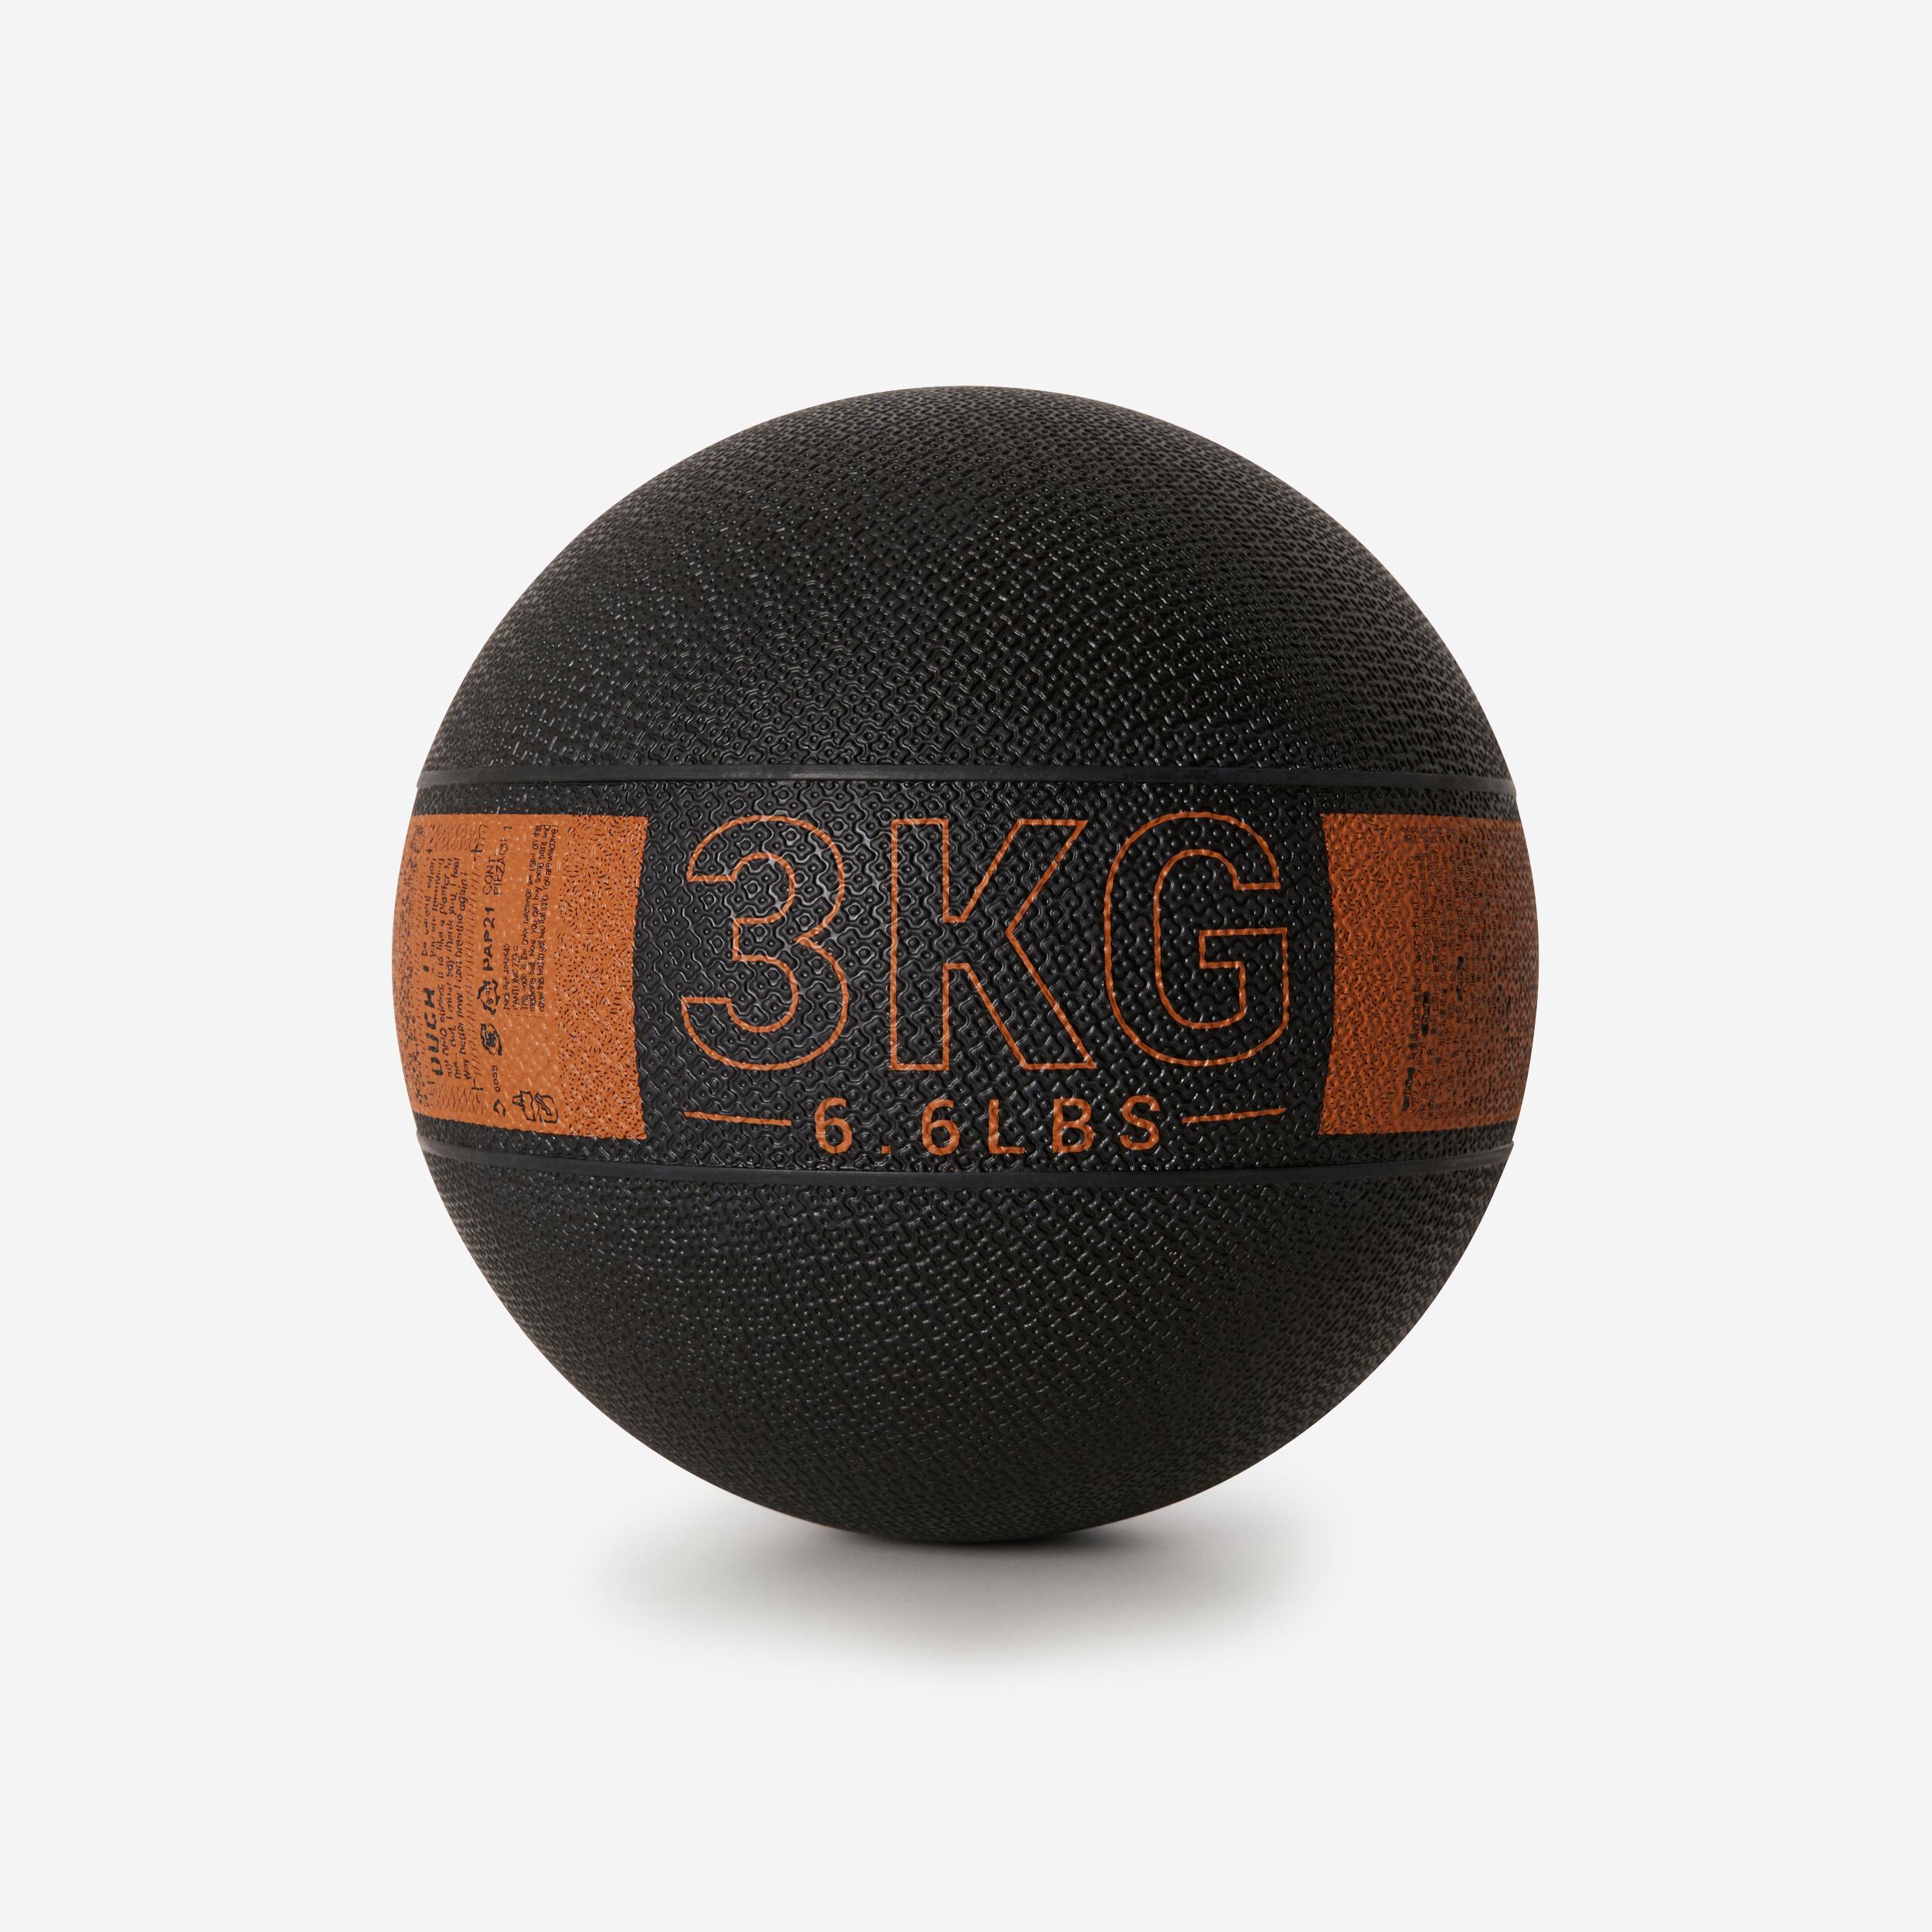 3 kg Rubber Medicine Ball - Black/Orange 1/4